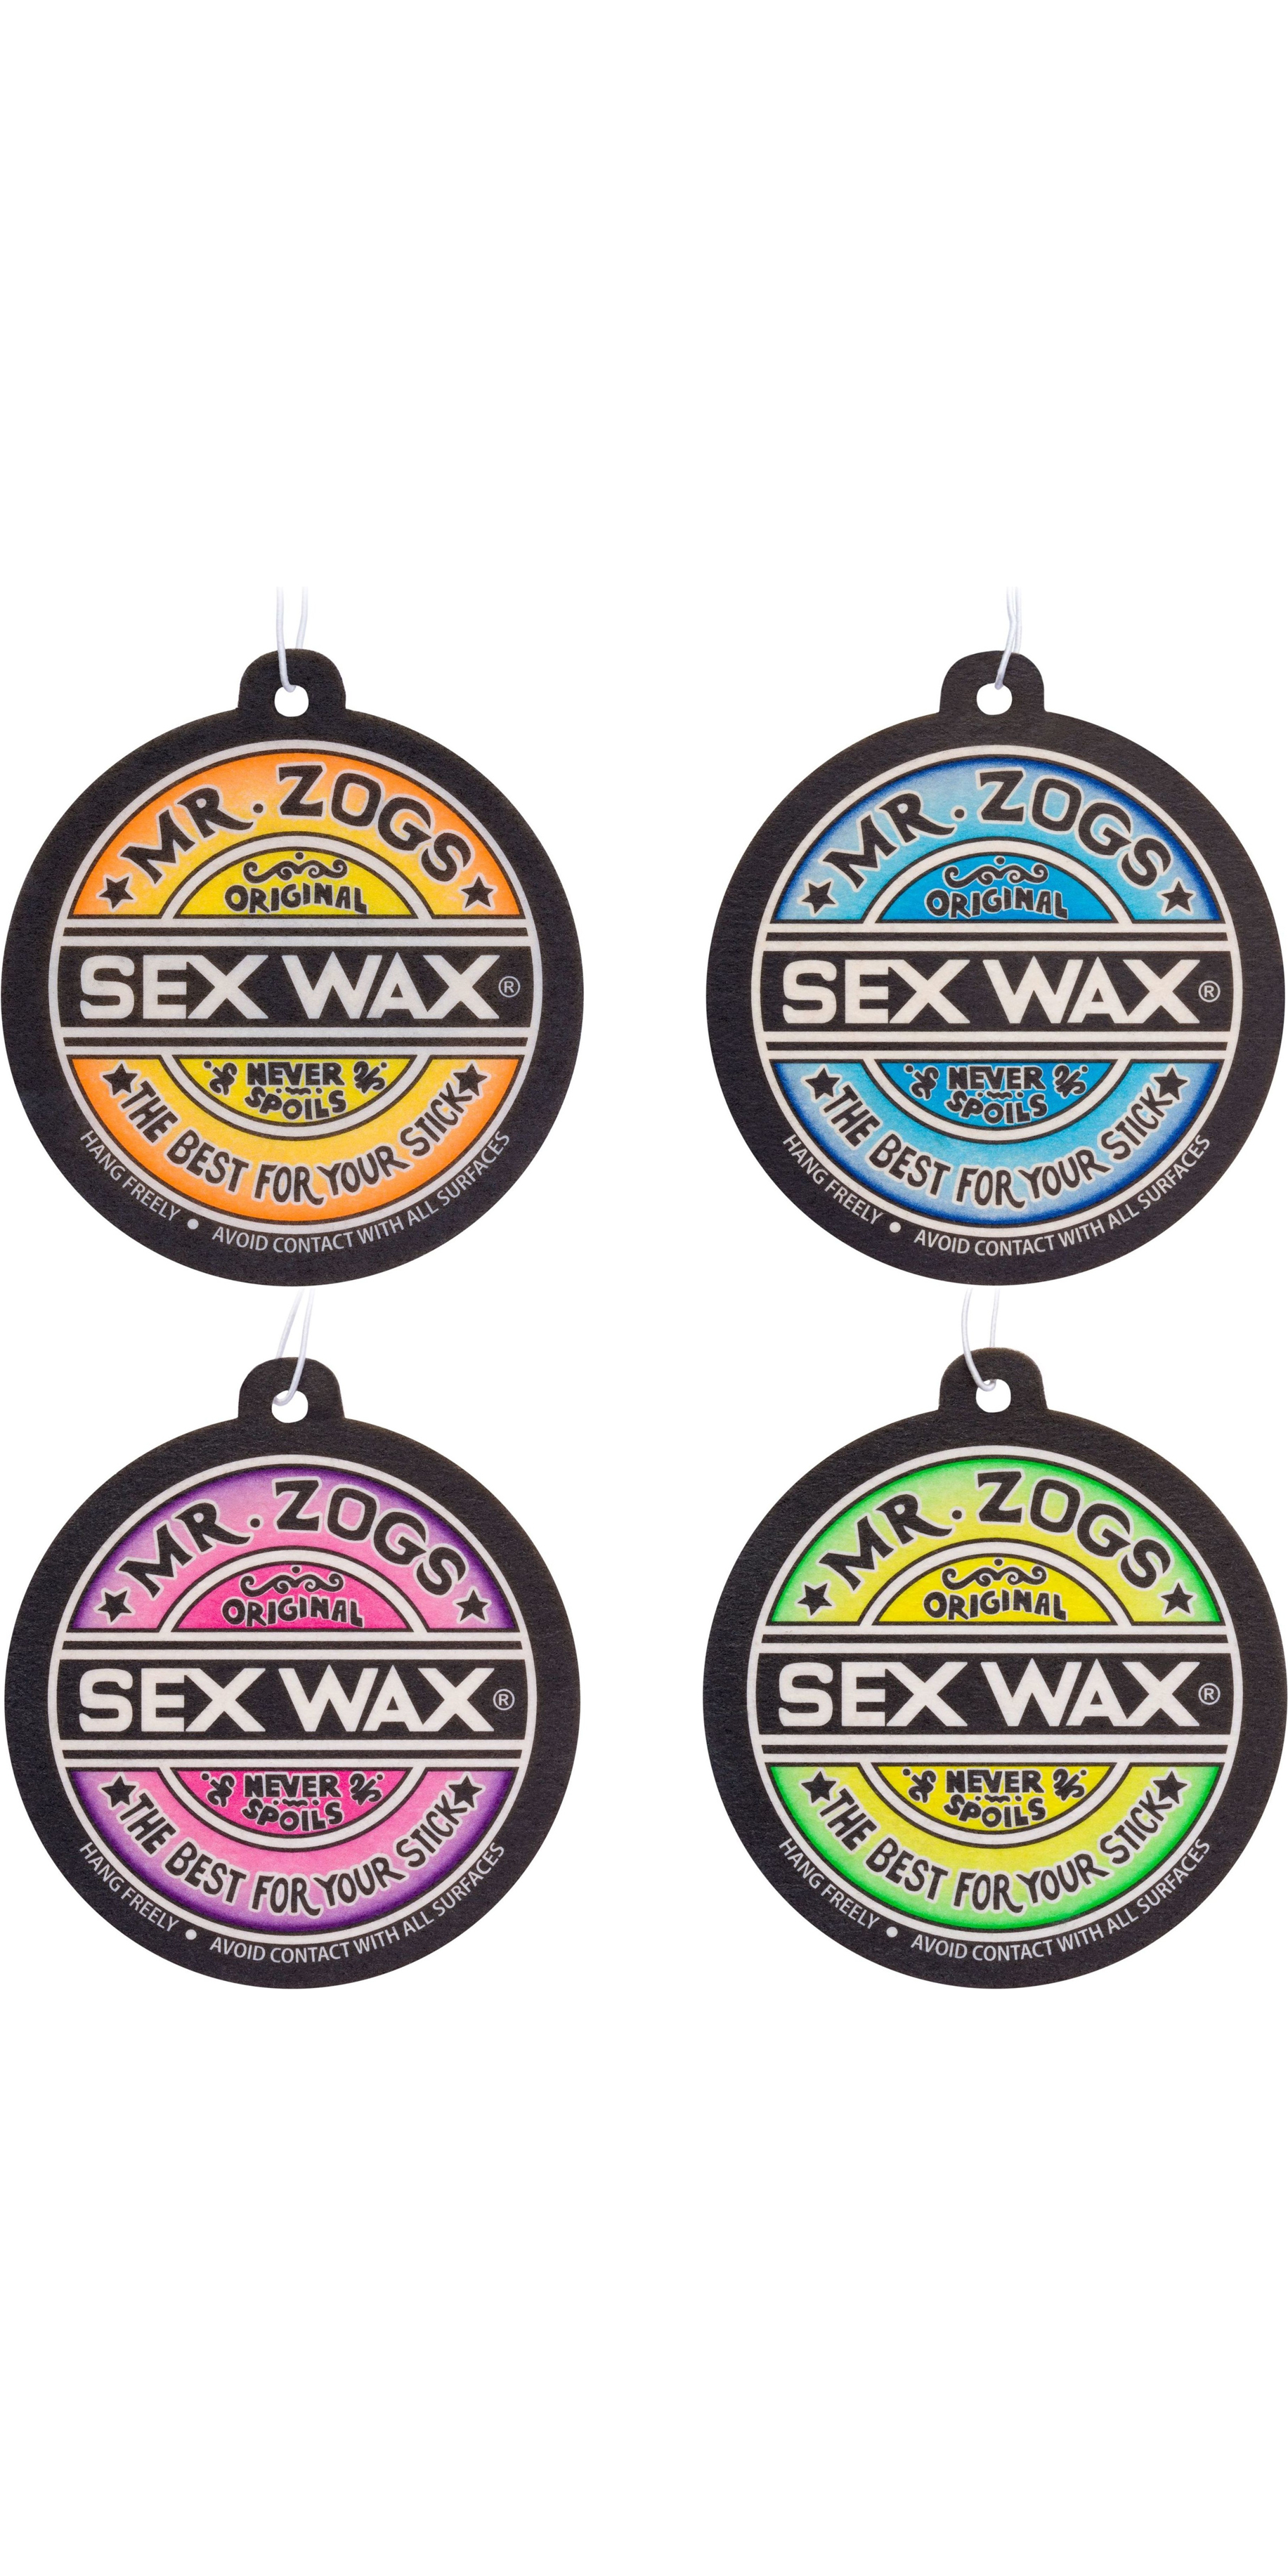 SEXWAX CAR AIR FRESHENER - Men's Accessories - Shop Sunnies, Hats